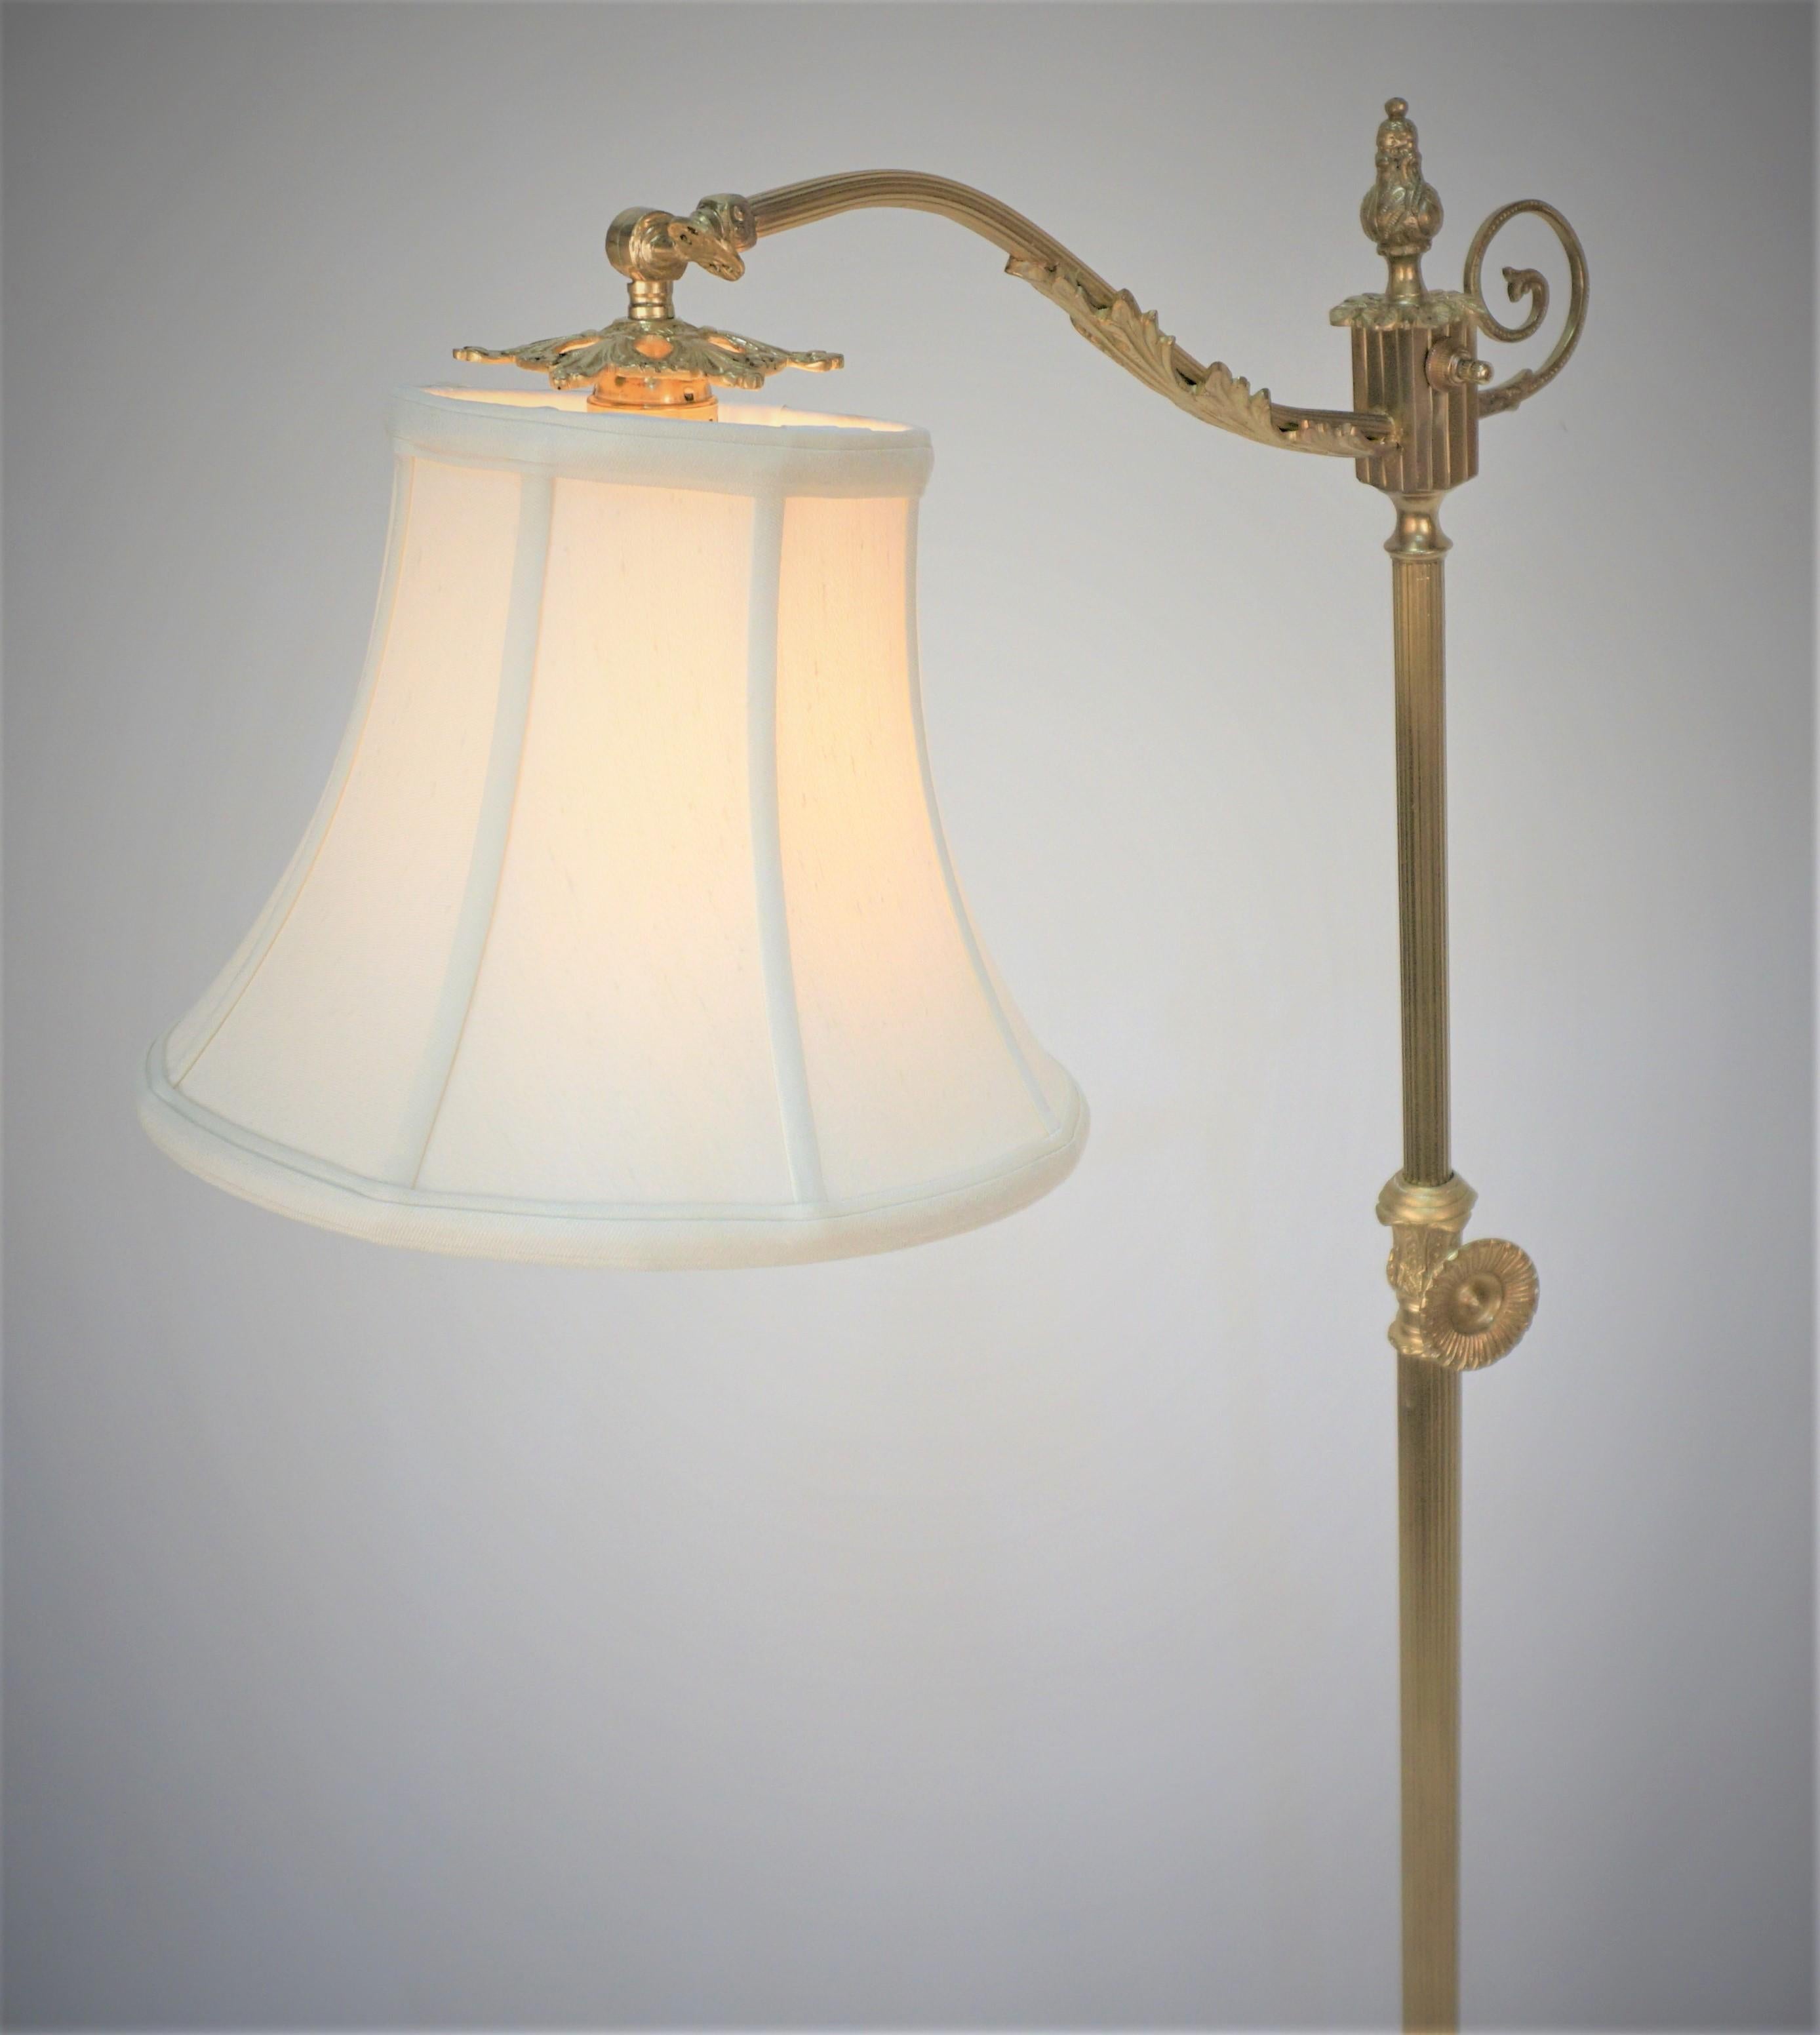 Elegant Spanish adjustable height bridge bronze floor lamp with silk lampshade.
Maximum height 63